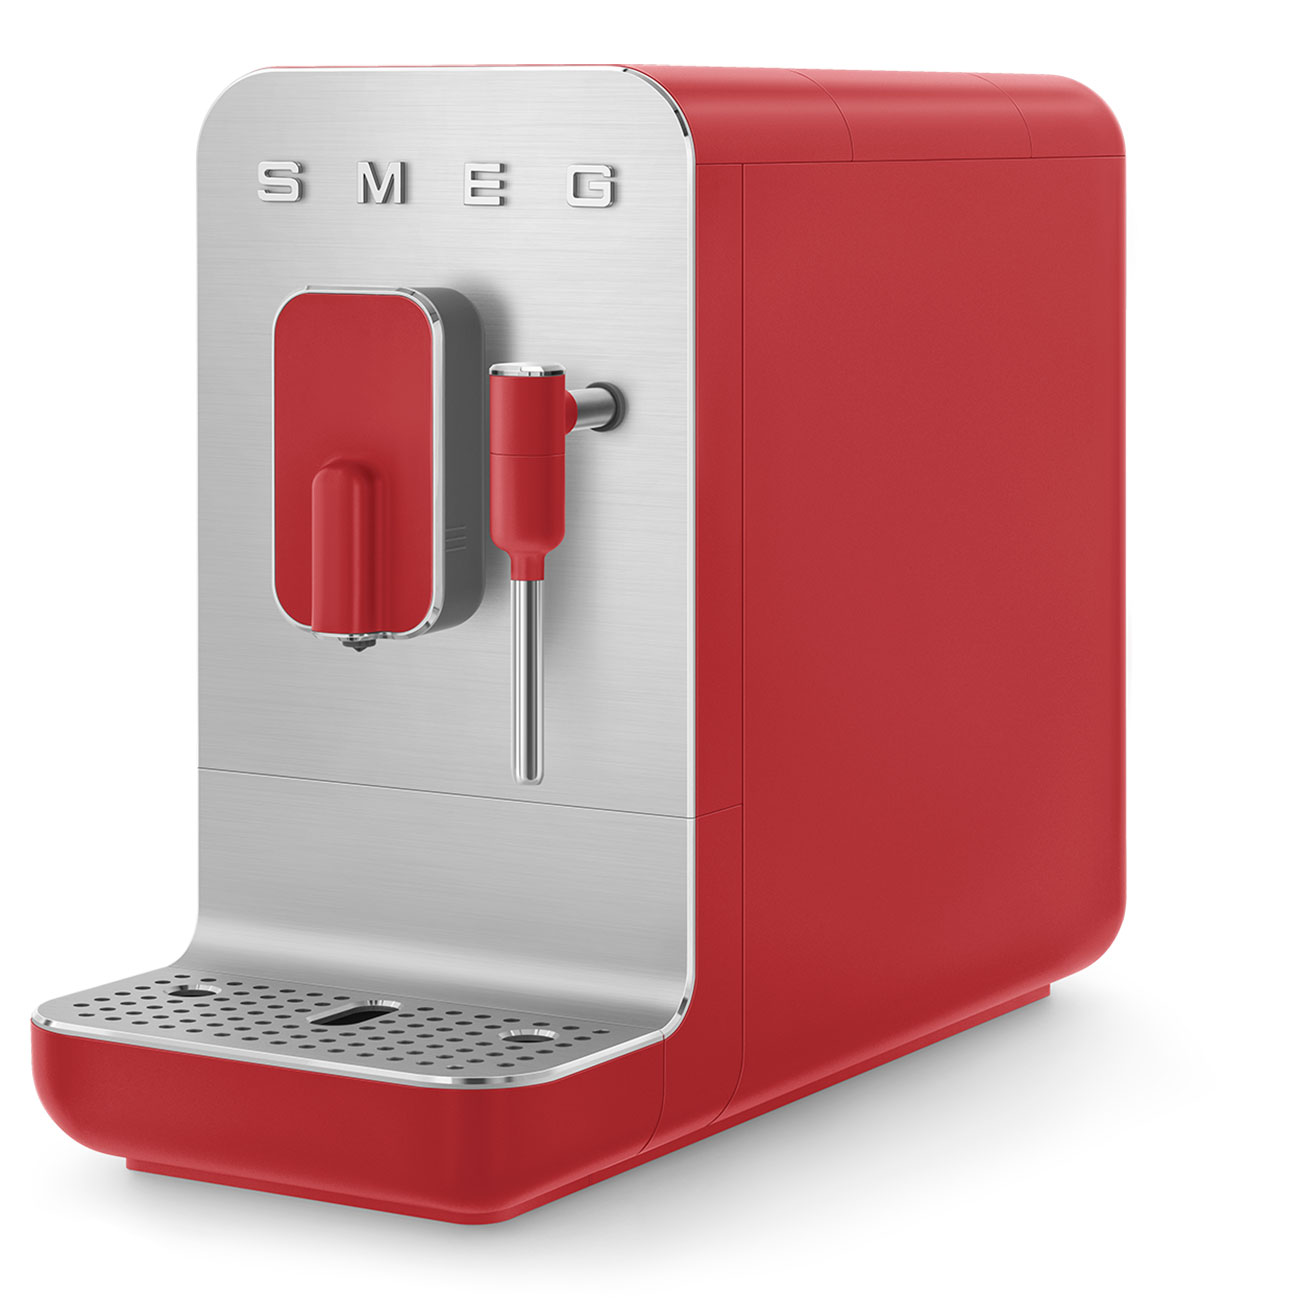 50'S Style BCC02 Espresso Otomatik Kahve Makinesi Mat Kırmızı